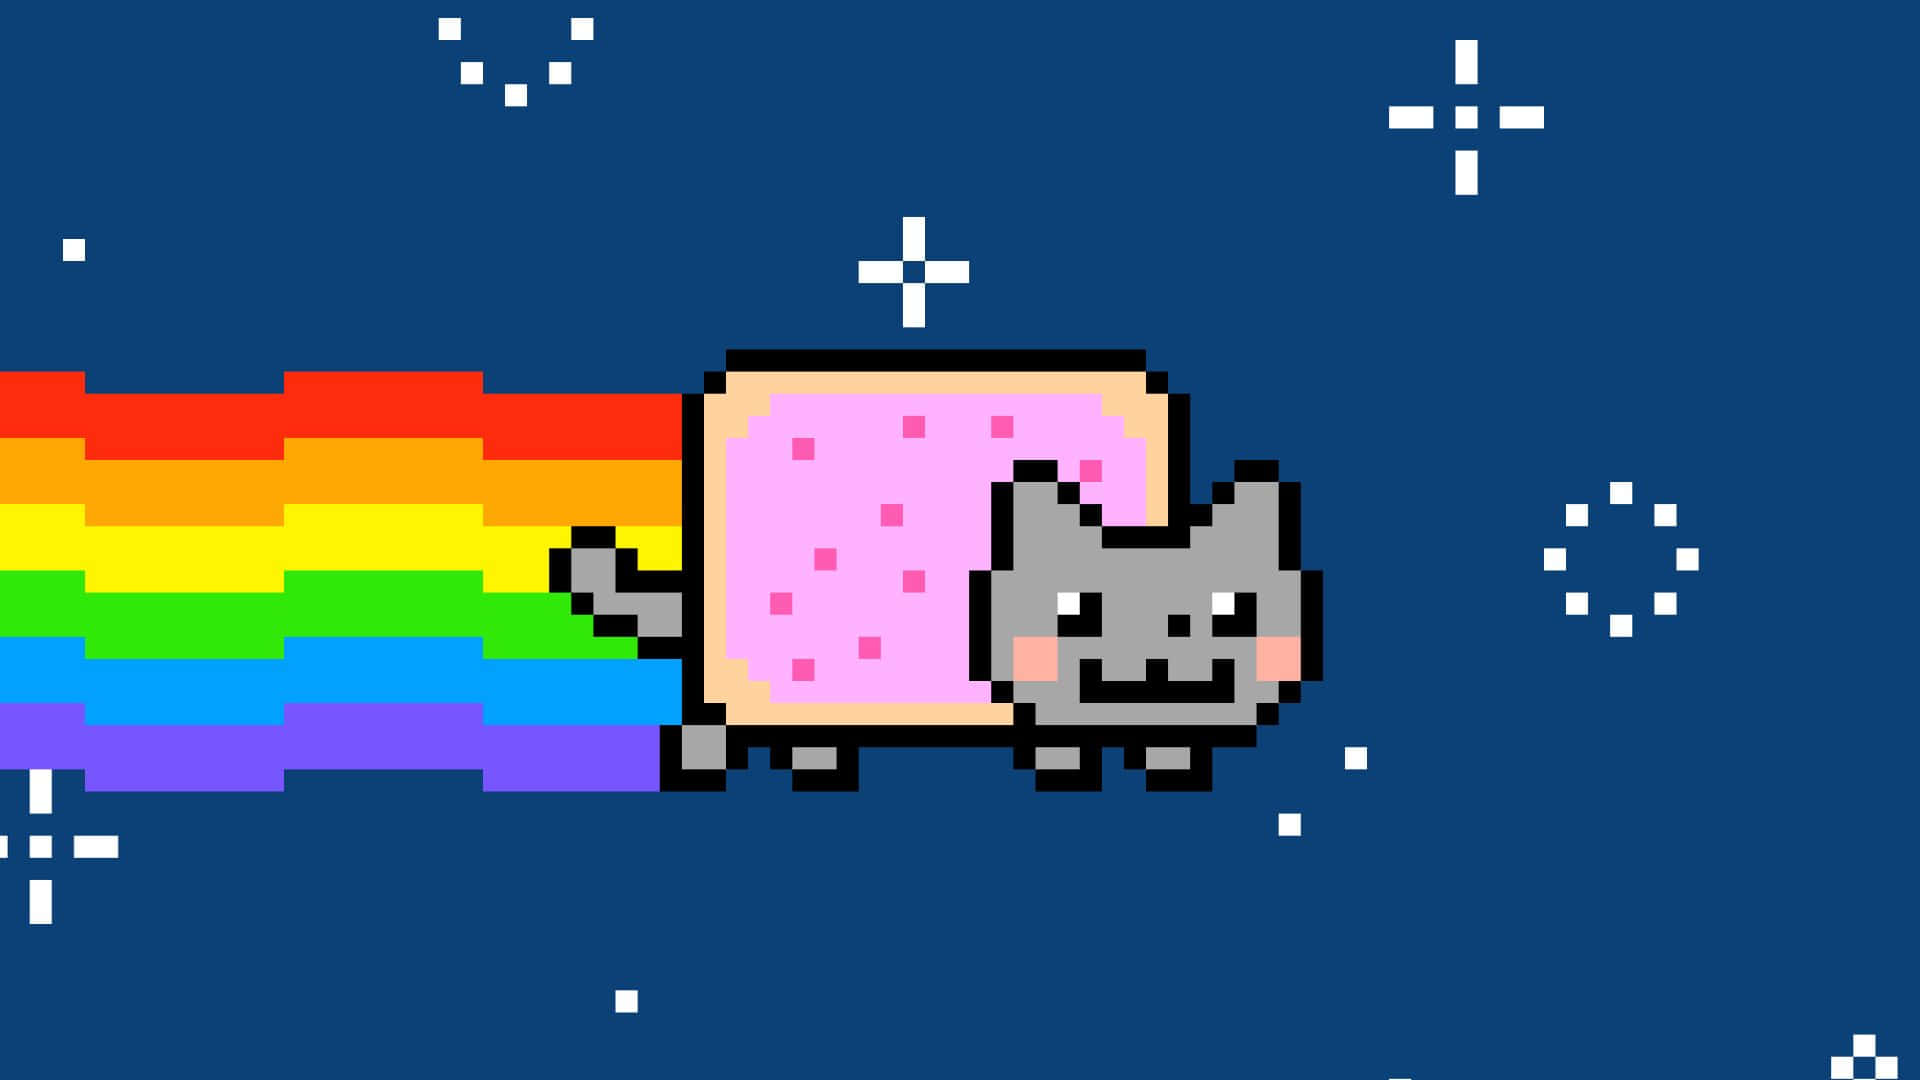 Nyan Cat flying through vibrant rainbow space